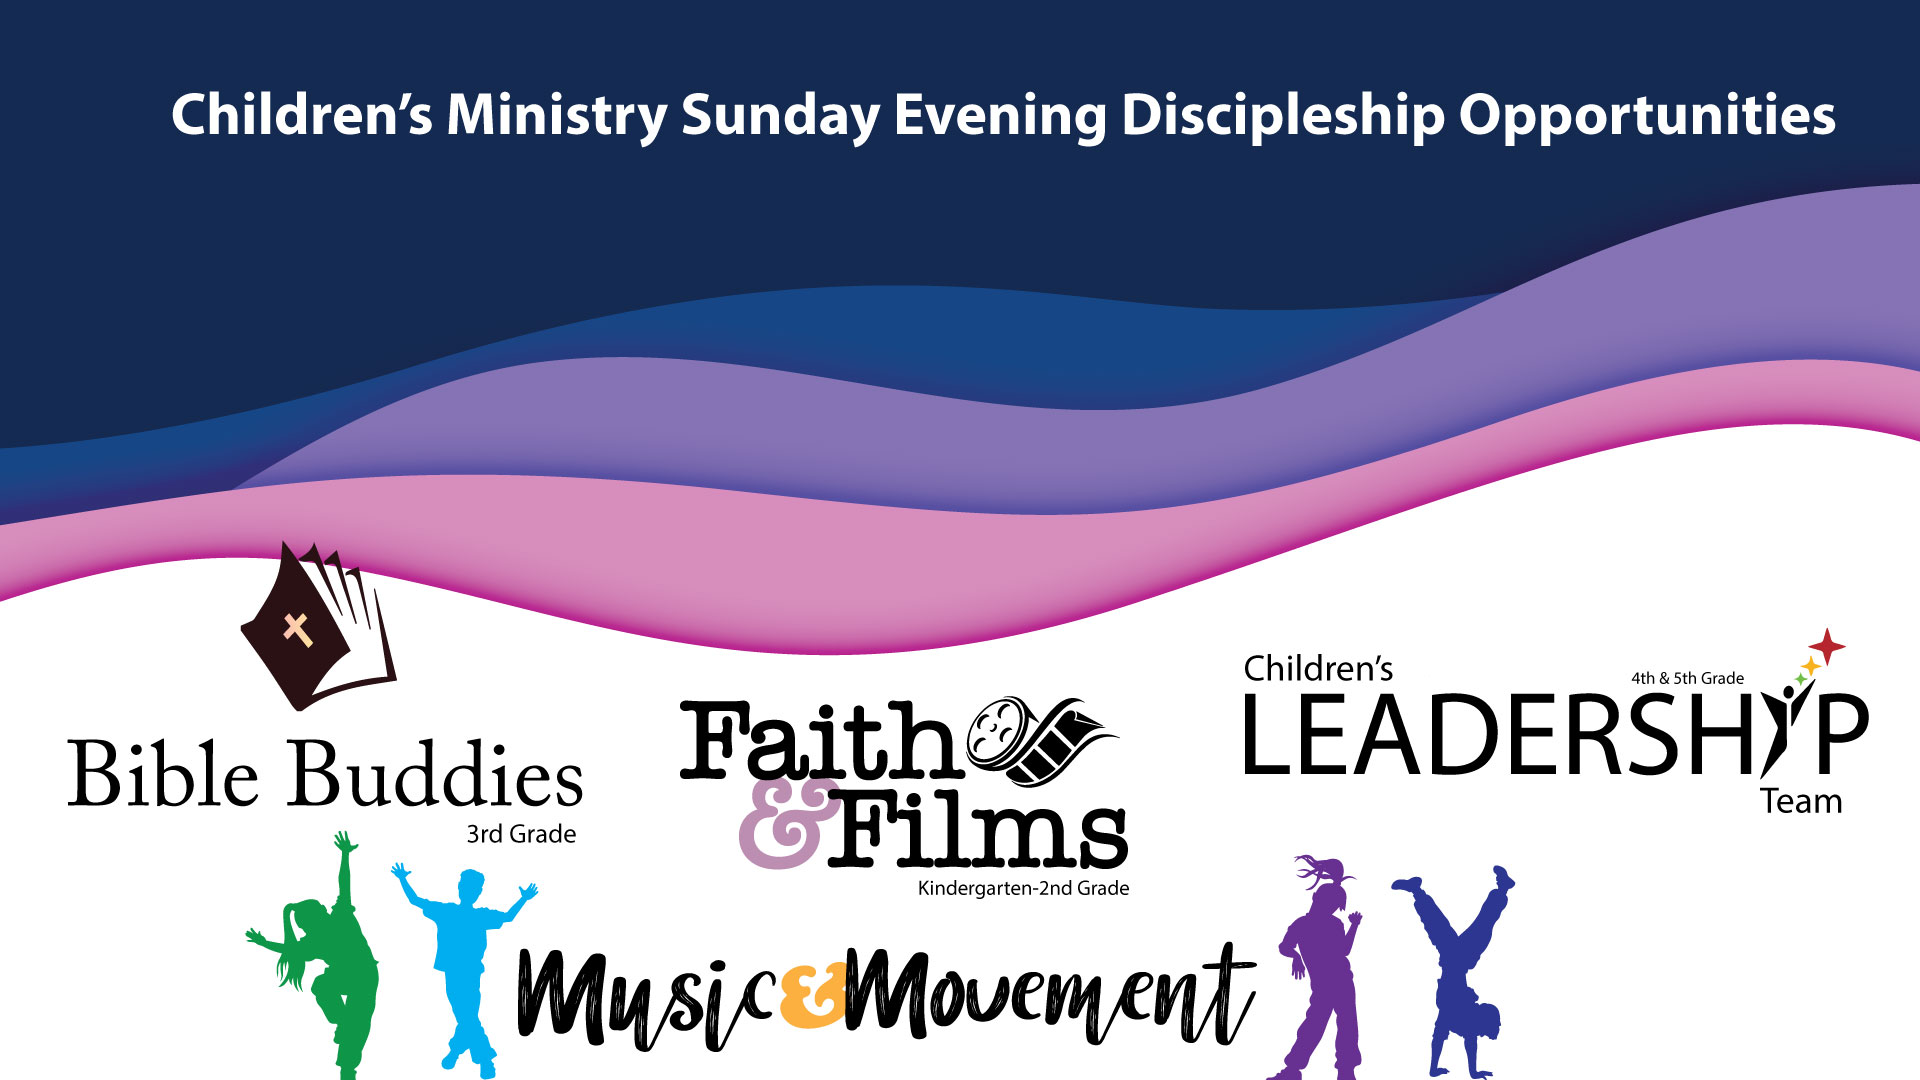 Children's Discipleship Opportunities: Music & Movement, Faith & Films, Bible Buddies, and Children's Leadership Team